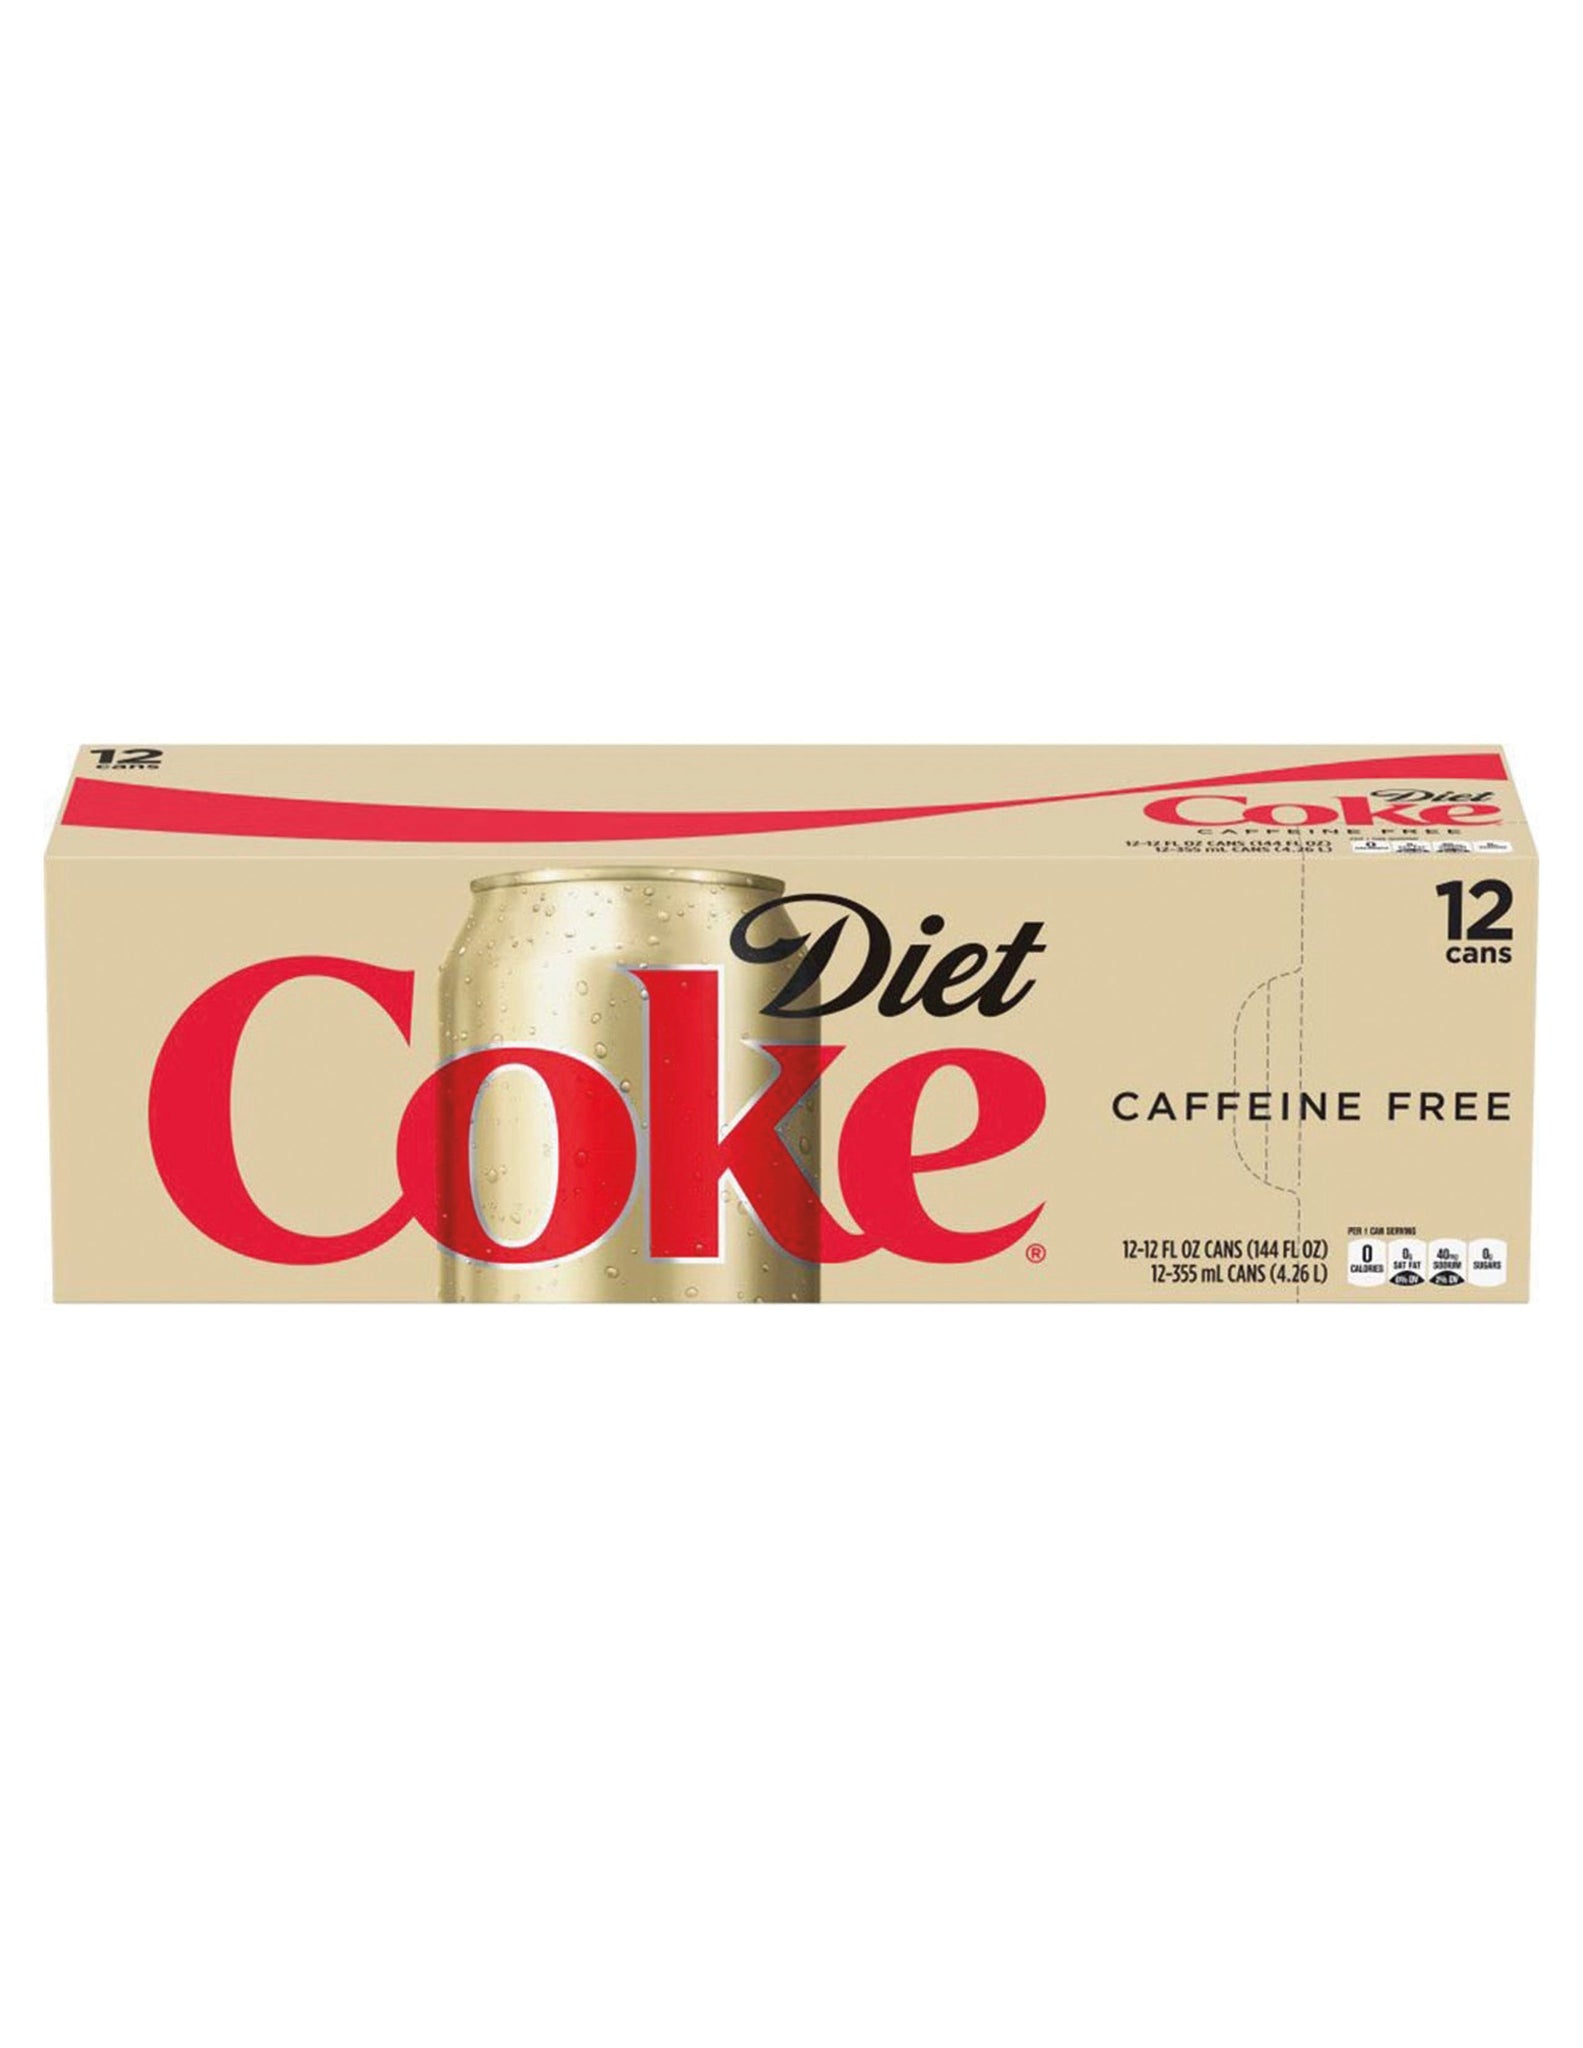 stl>Coke Diet Caffeine Free - 12 Pack